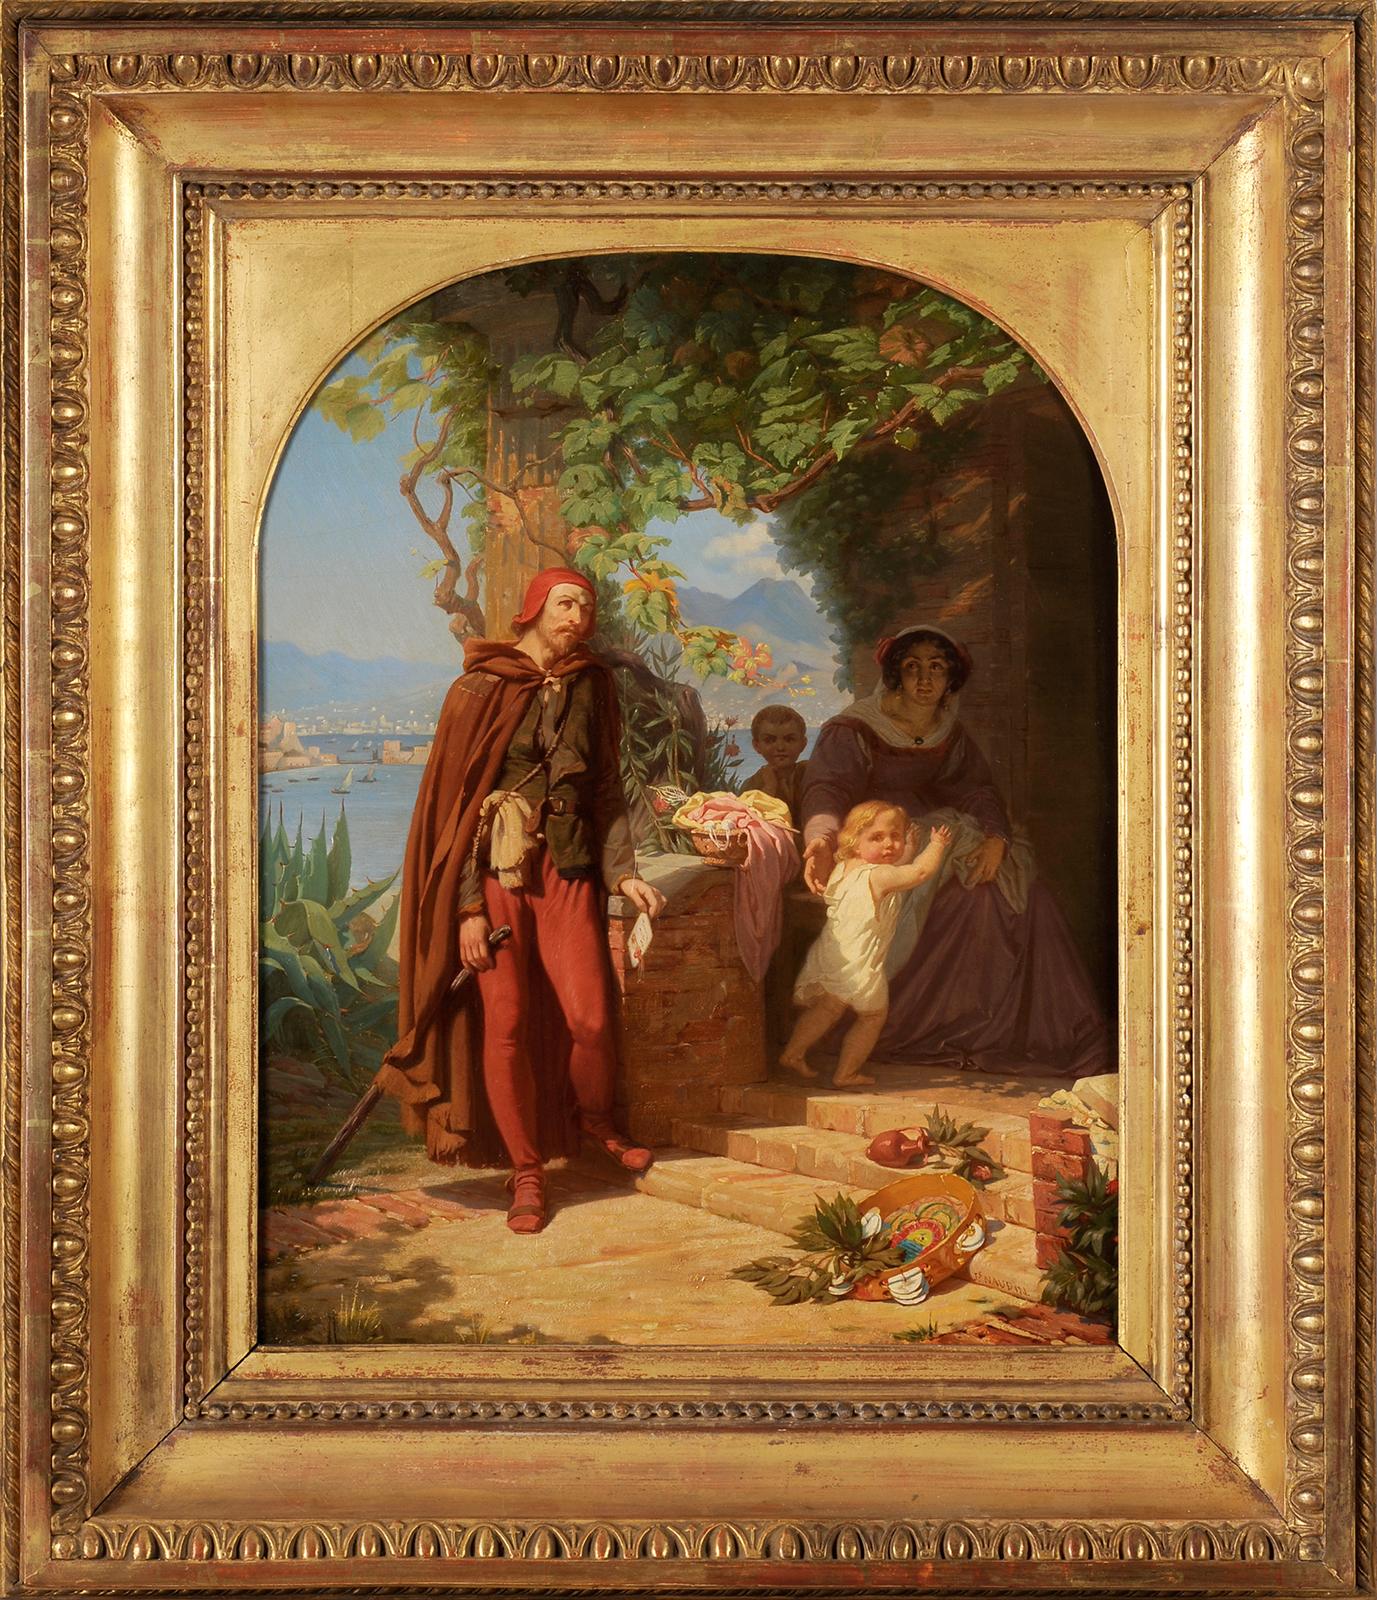 Jules Naudin (1817-c.1876) - Tasso arriving at his sister's house in Sorrento